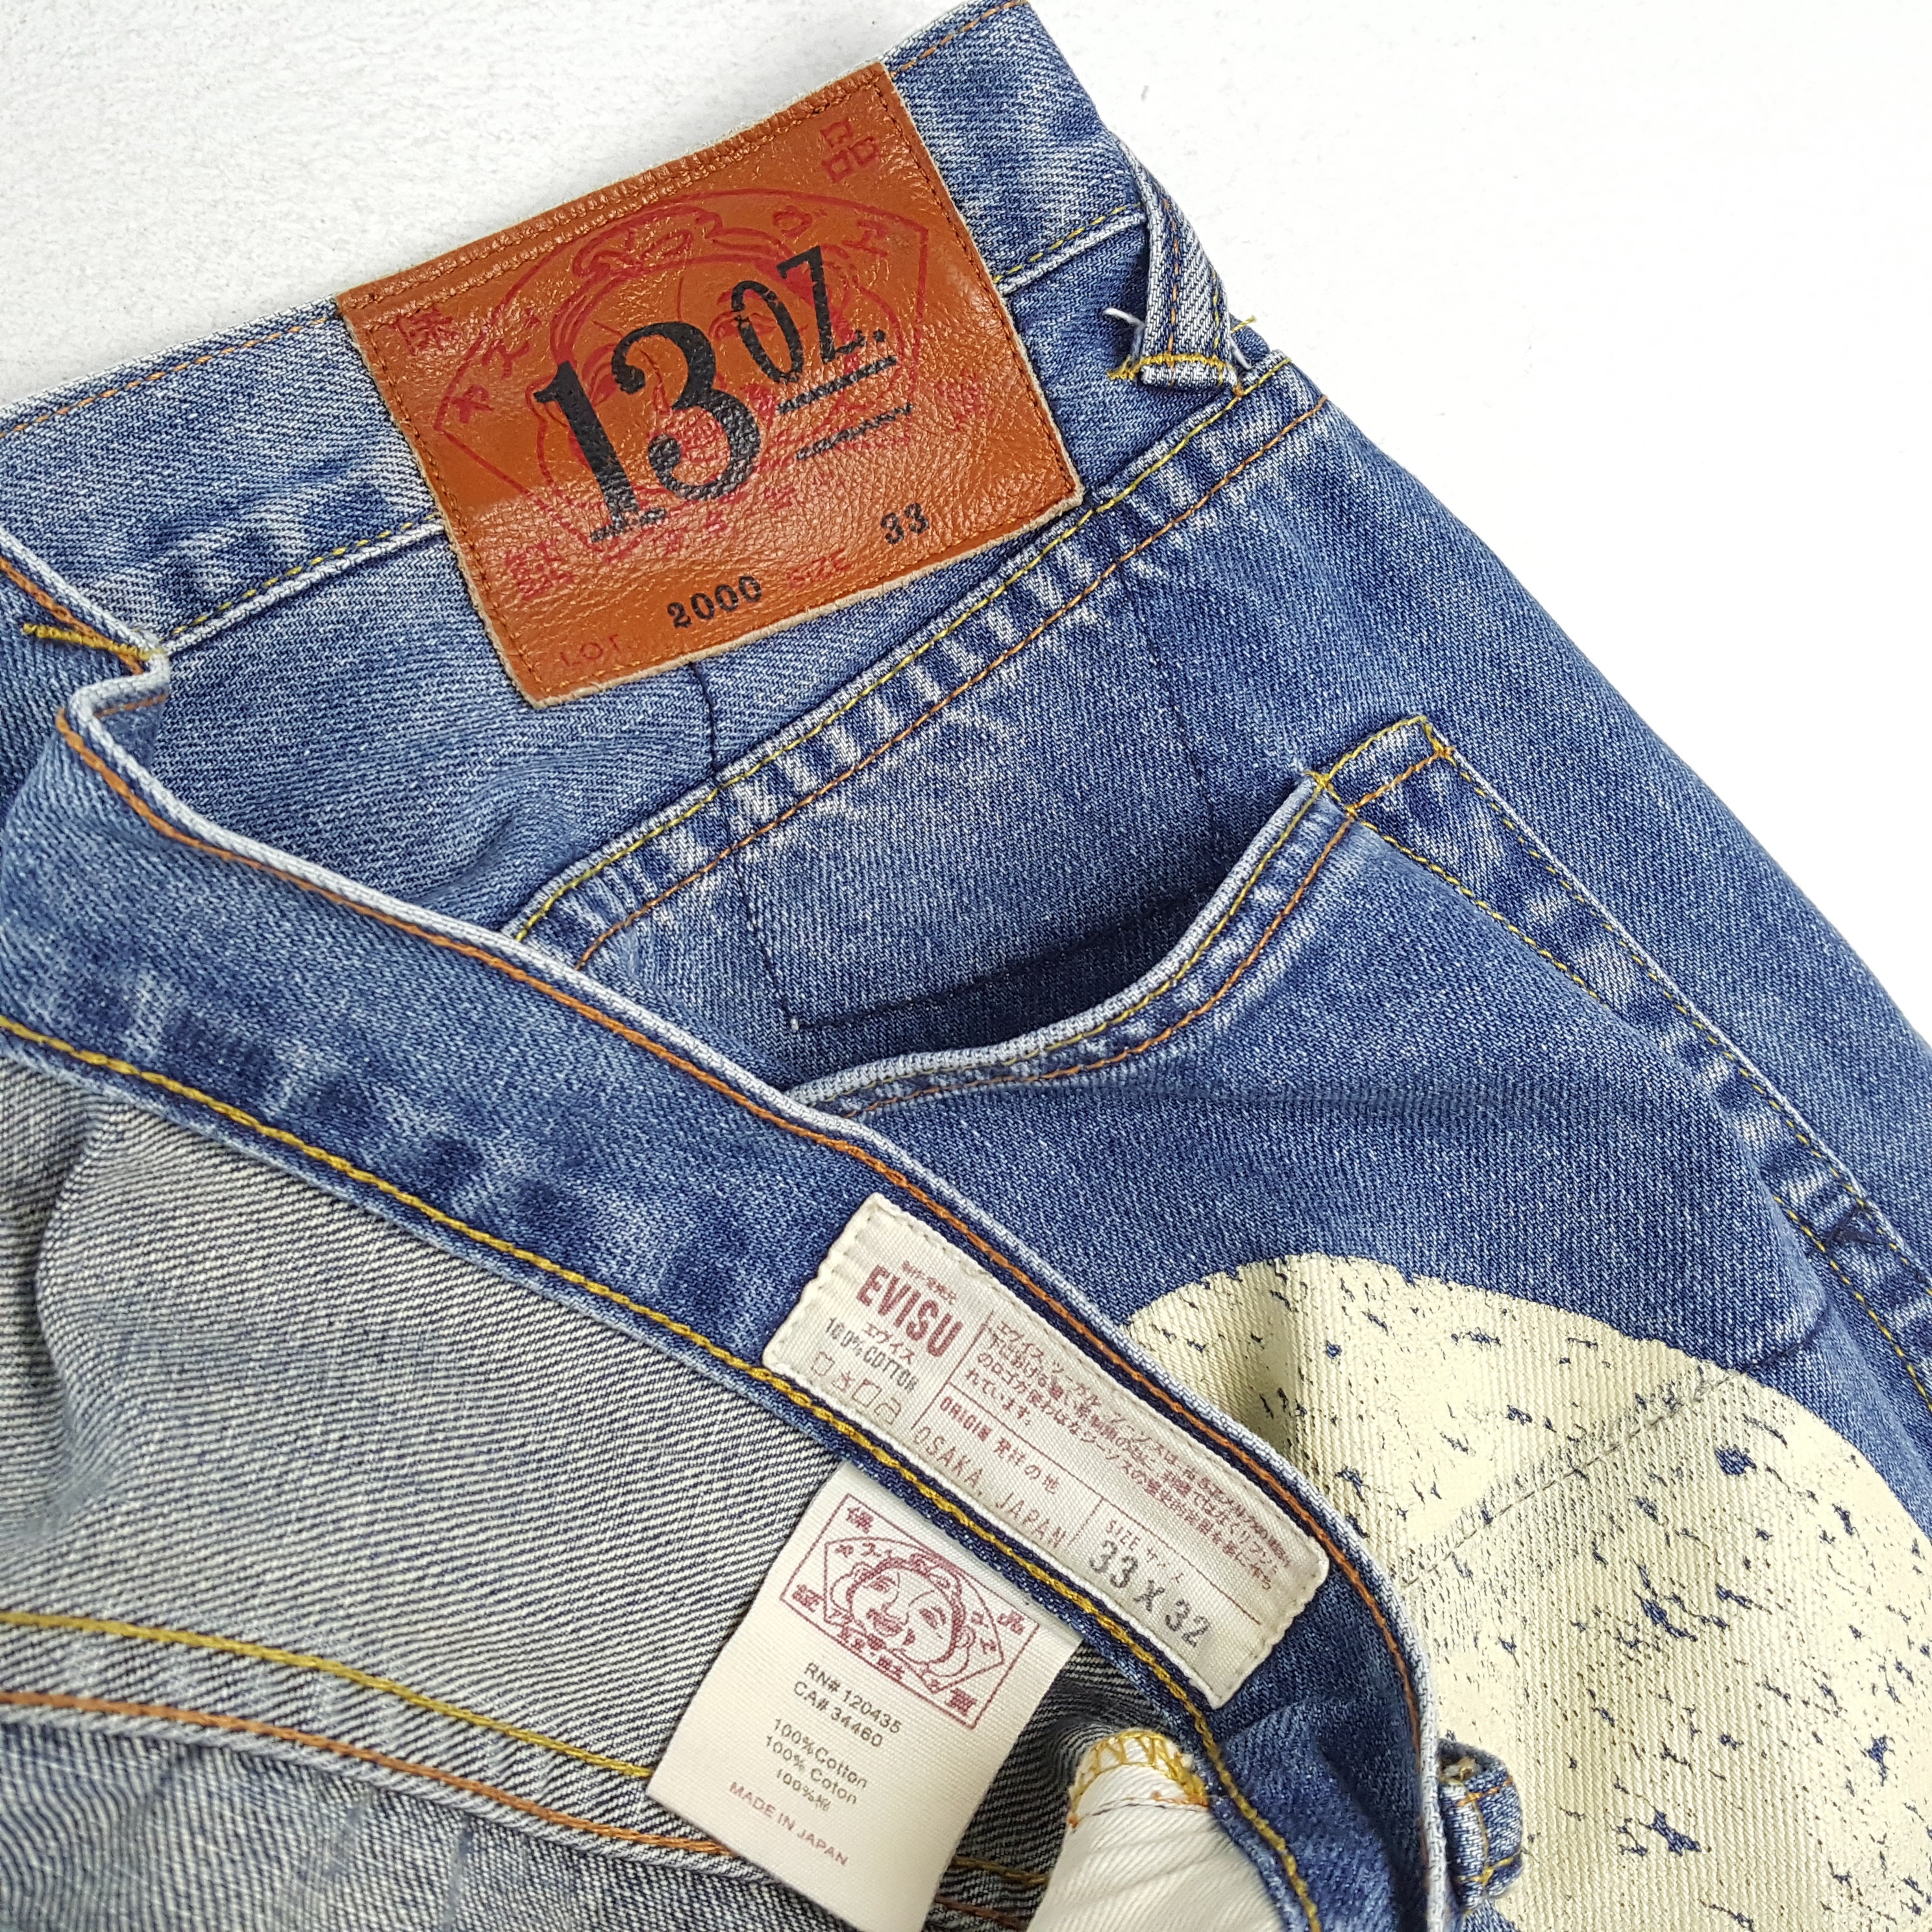 Vintage EVISU Japanese Brand Daicock Jeans picture picture picture